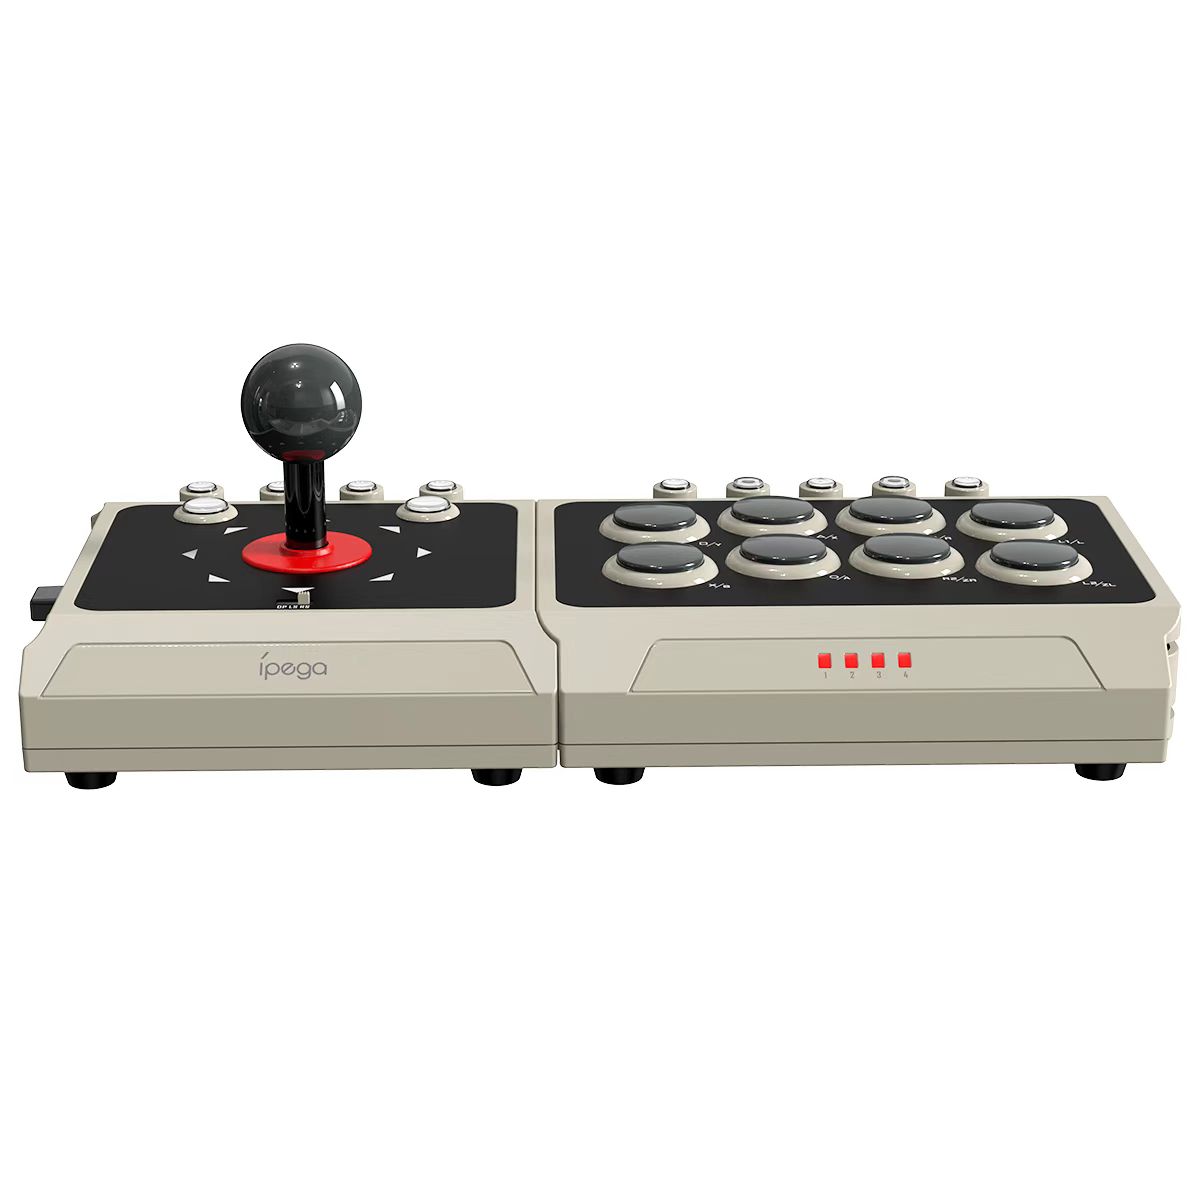 PG-9221 fighting game joystick